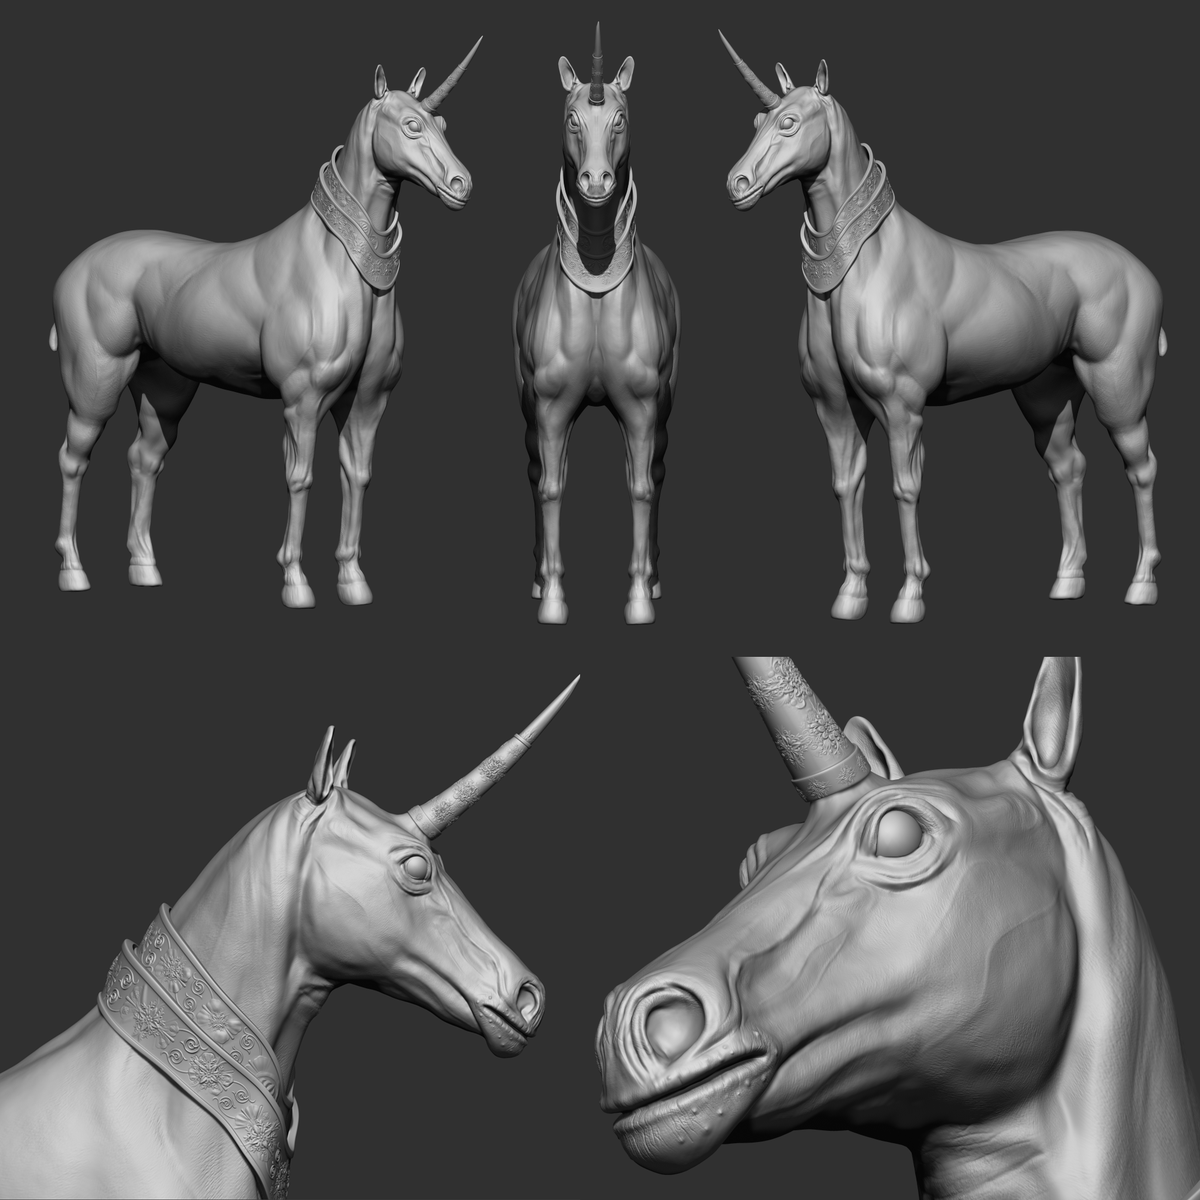 Enchanted Unicorn design for artquest challenge by @ArtByClaina done.

#conceptart #characterdesign #digitalart #fantasy #3dmodel #3dmodeling #sculpt #stylized #art #creaturedesign #monsterdesign #3dart #3dsculpting #gameassets #gamecharacter #gameart #unicorn #horse #animals